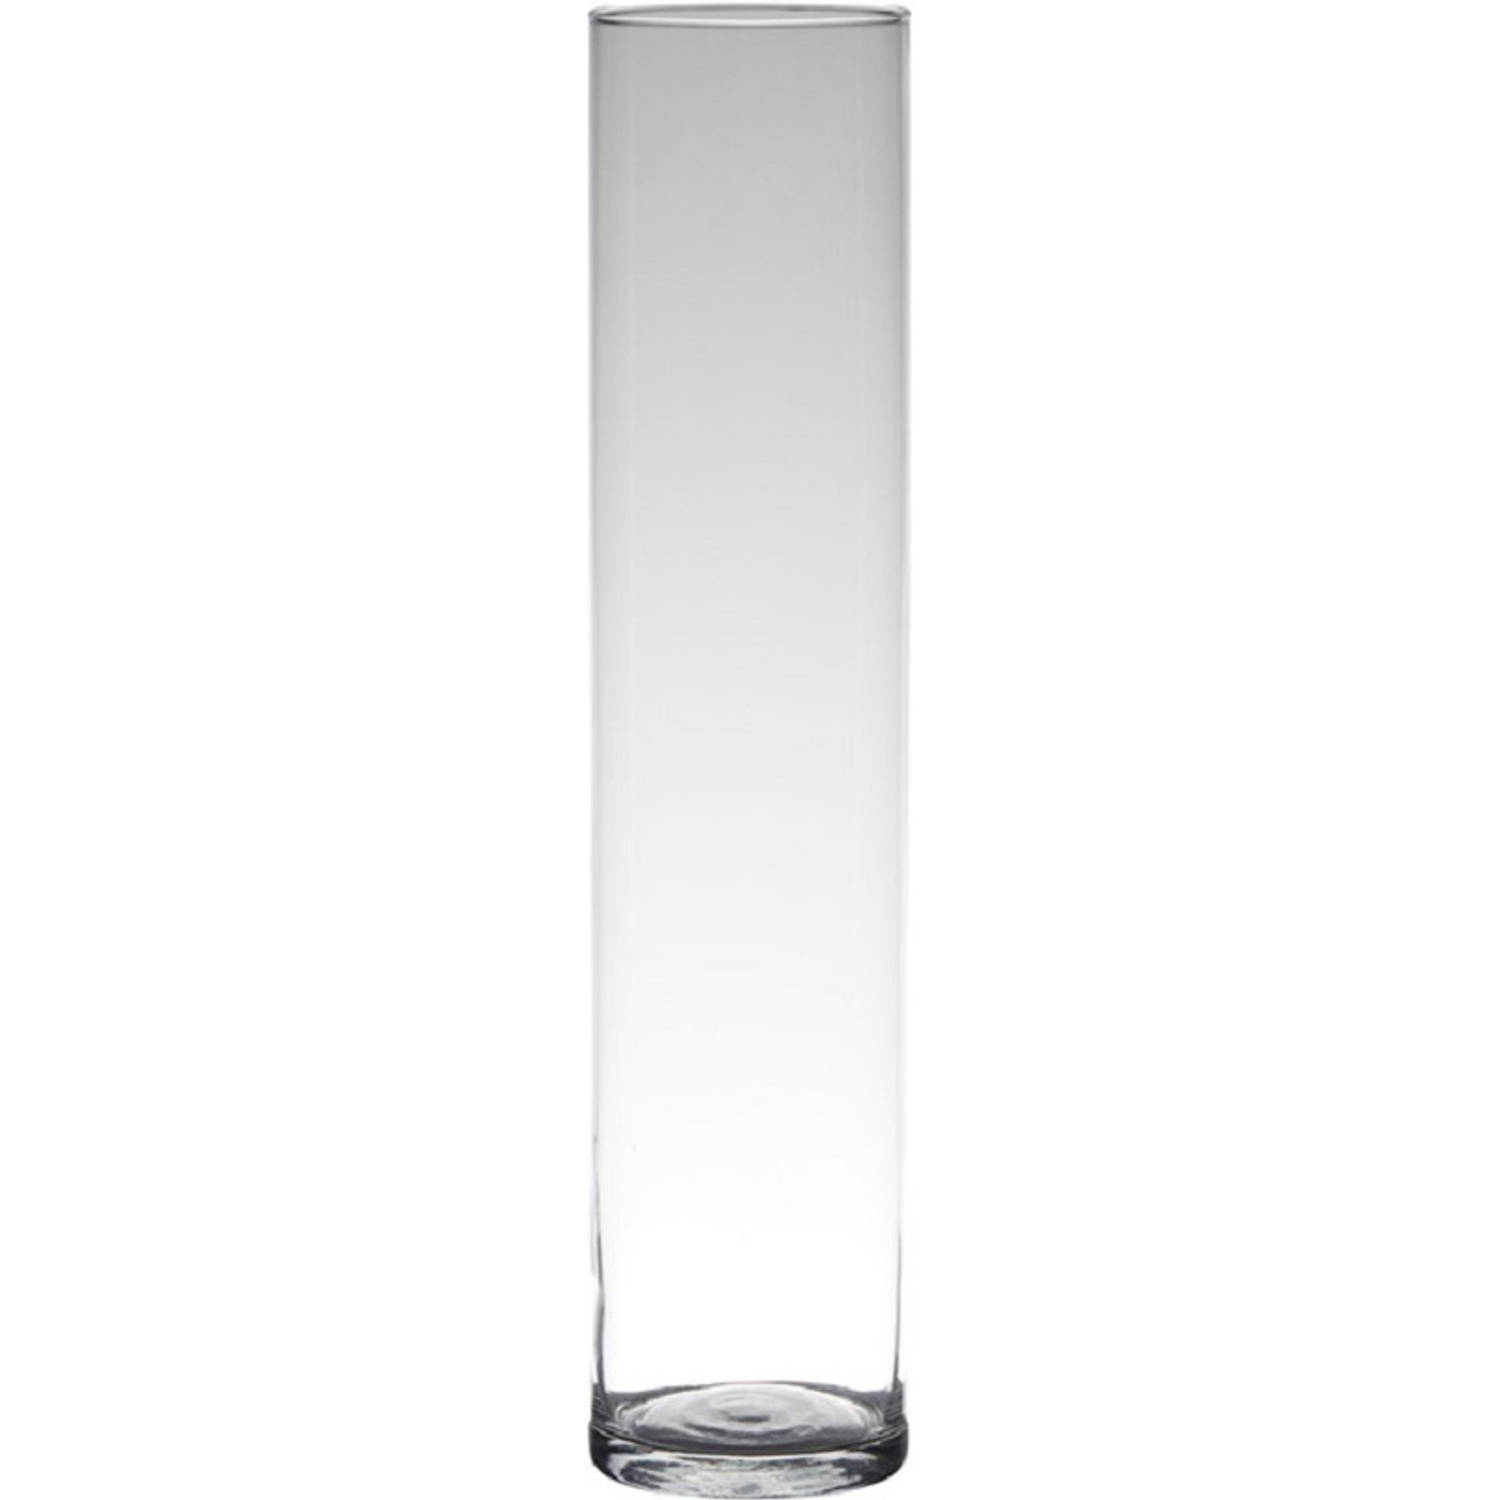 Transparante home-basics cylinder vorm vaas/vazen van glas 50 x 9 cm - Vazen